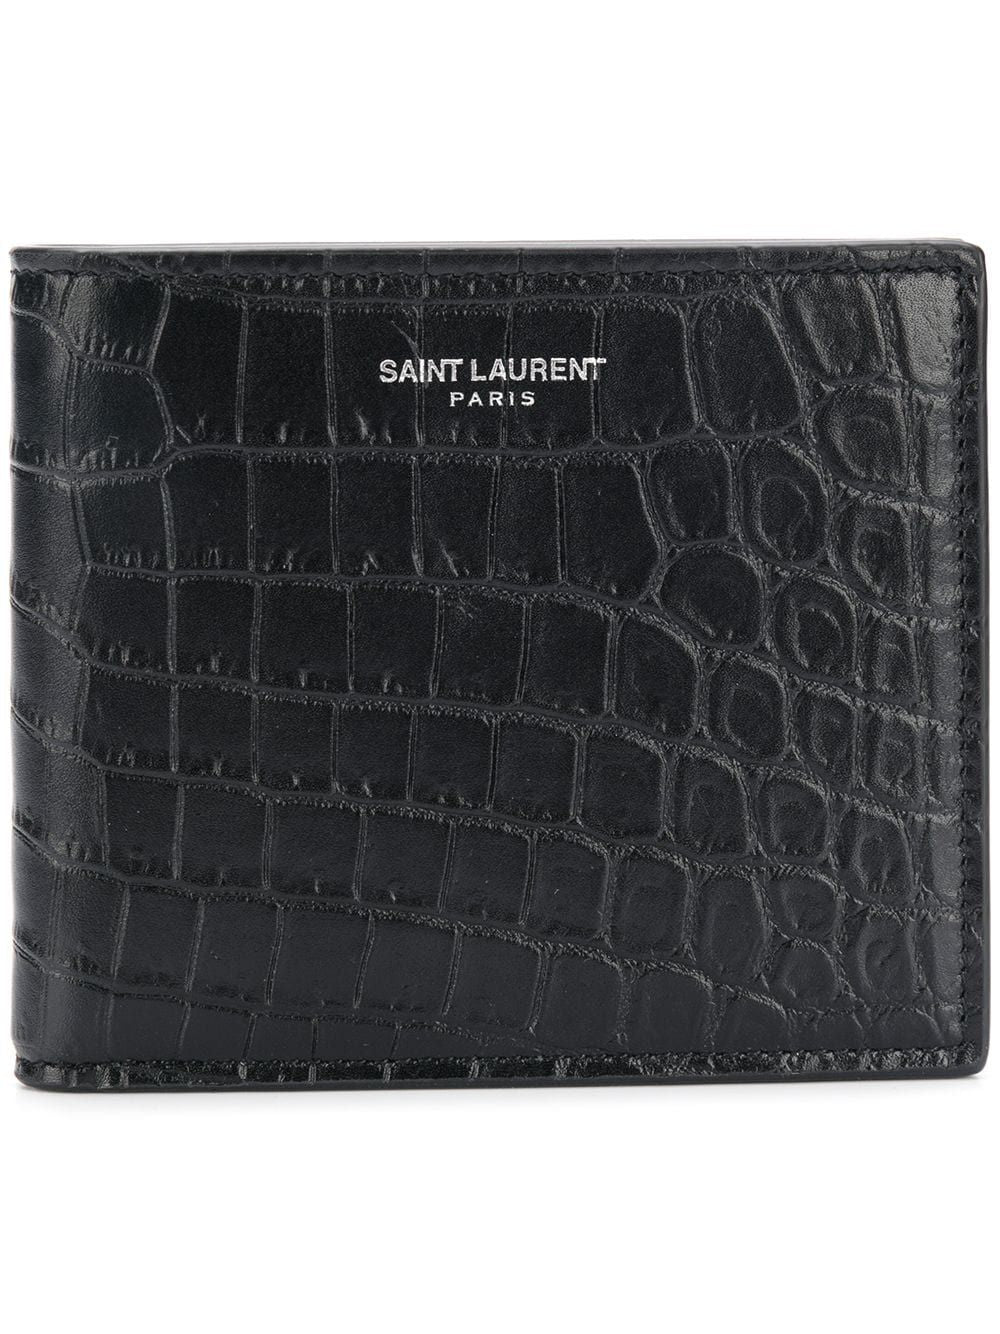 SAINT LAURENT Black Logo Print Wallet for Men